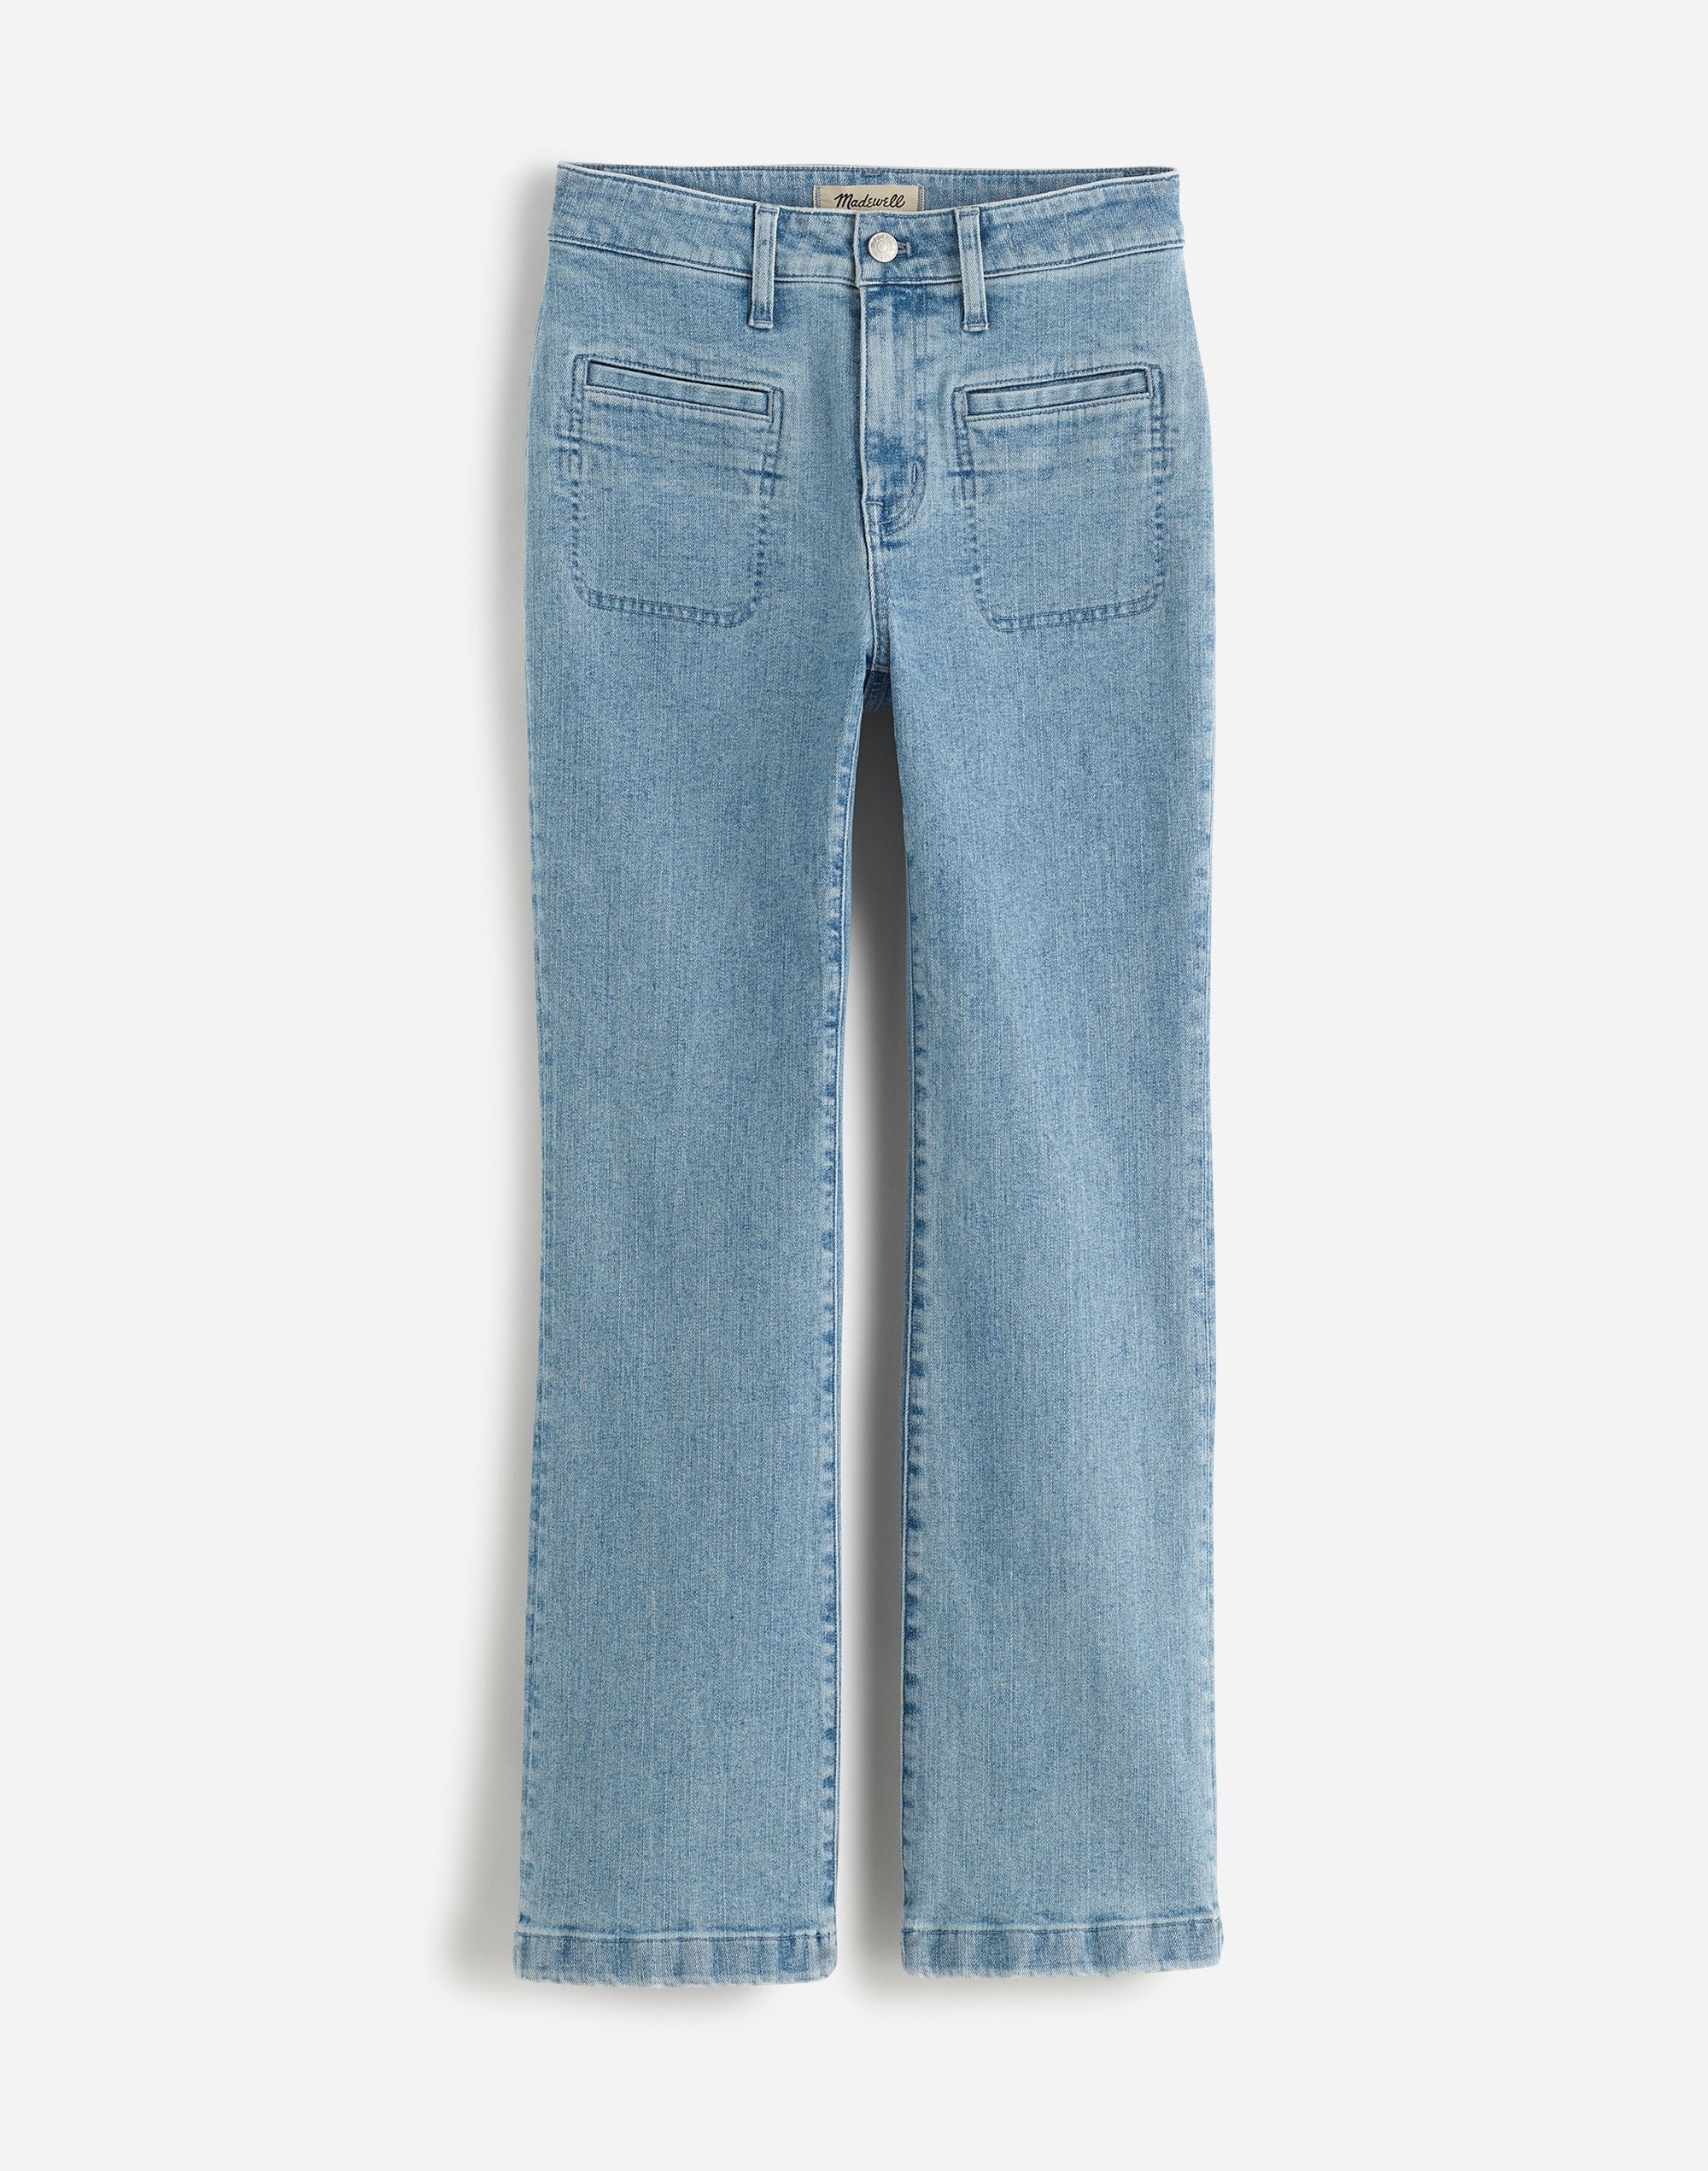 Curvy Kick Out Crop Jeans Penman Wash: Patch Pocket Edition